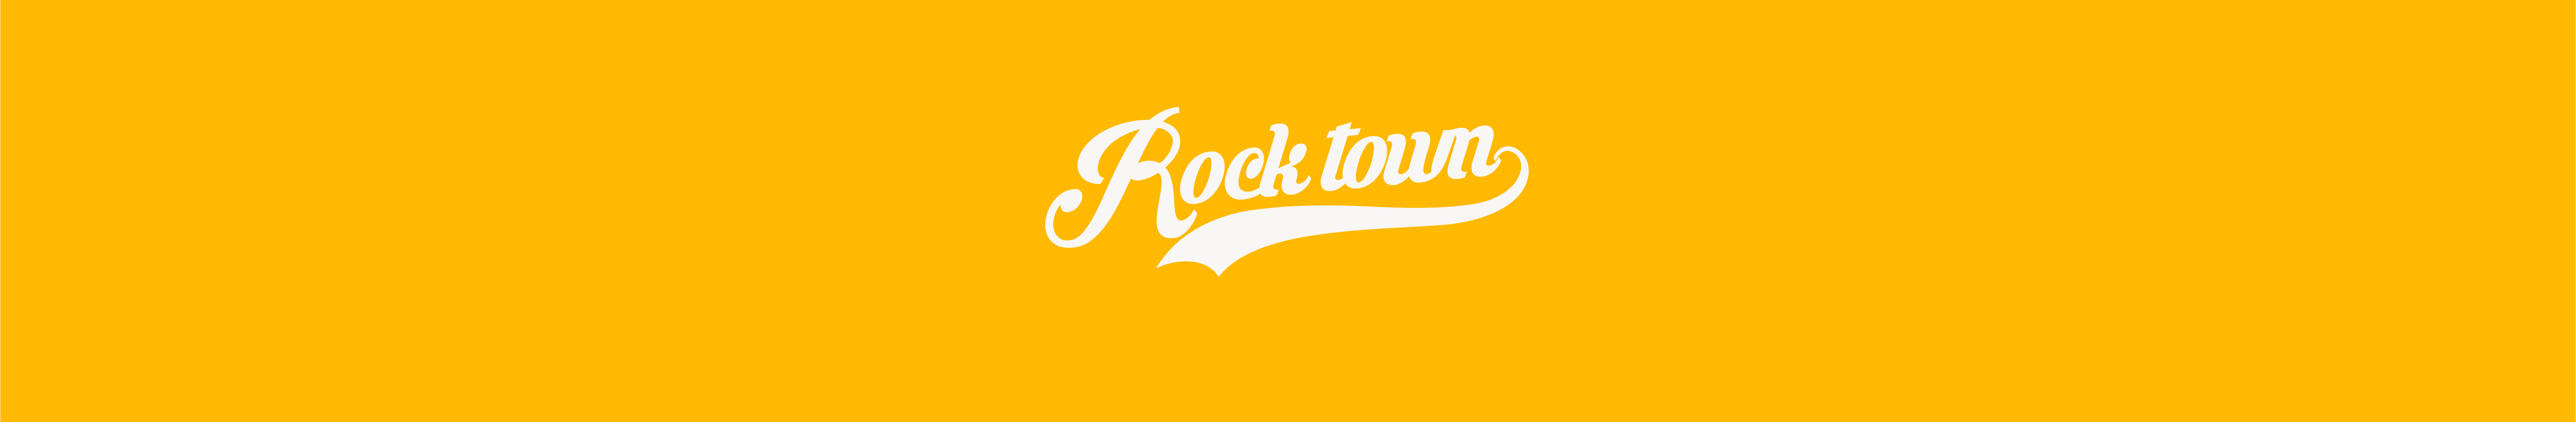 Banner de perfil de Rock Town